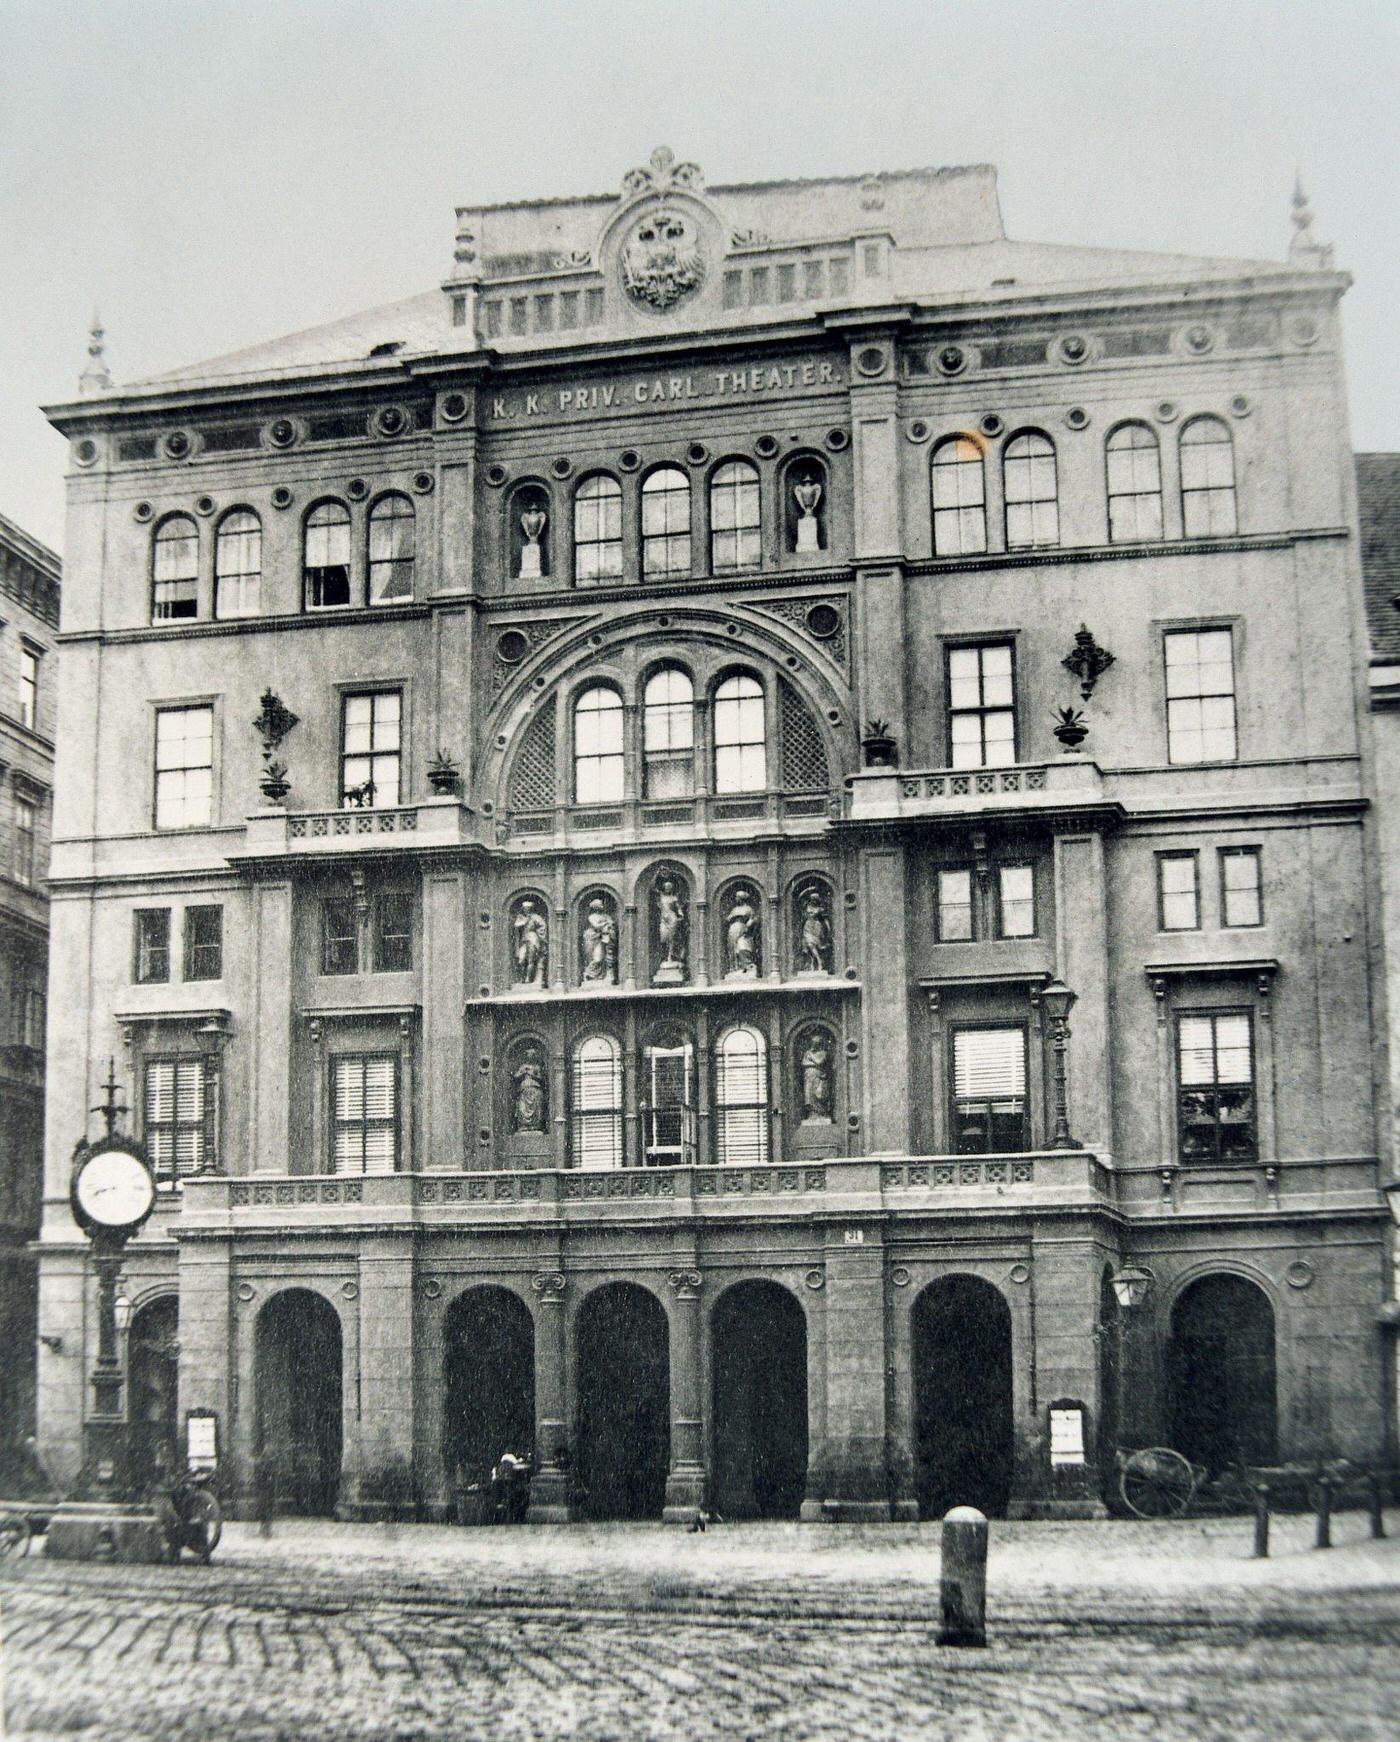 Carl-Theater in Vienna, Leopoldstadt 2nd district, Opened in 1874, destroyed during World War II, Around 1900